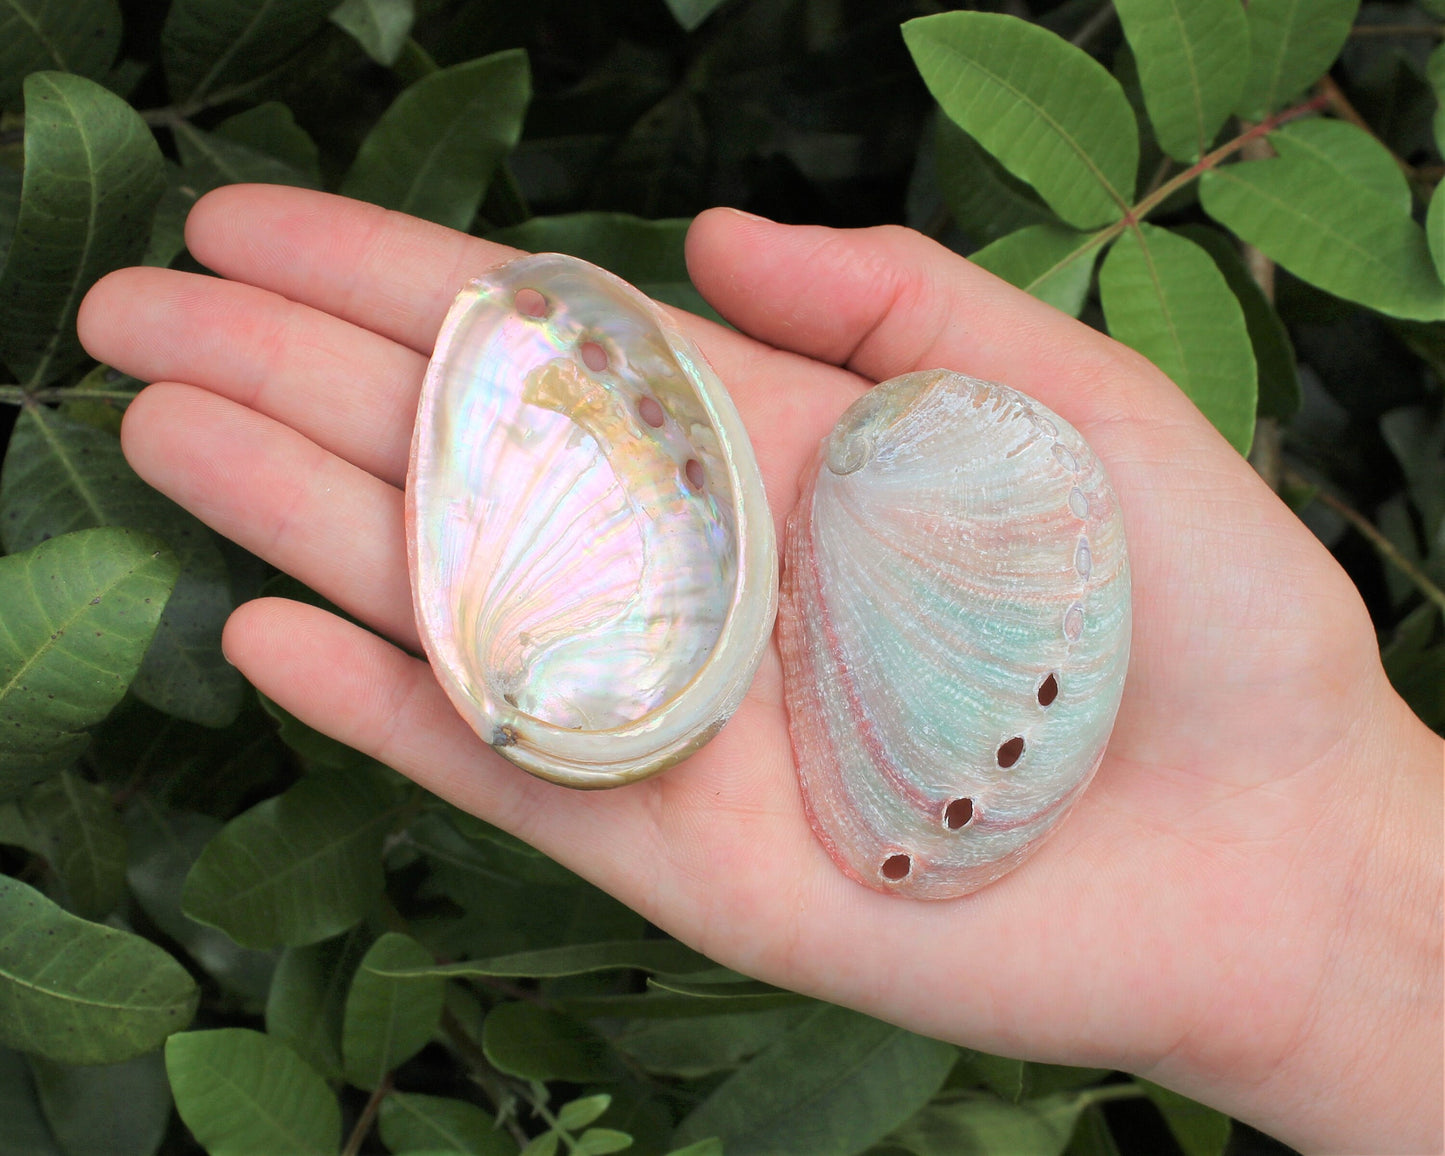 Abalone Sea Shell